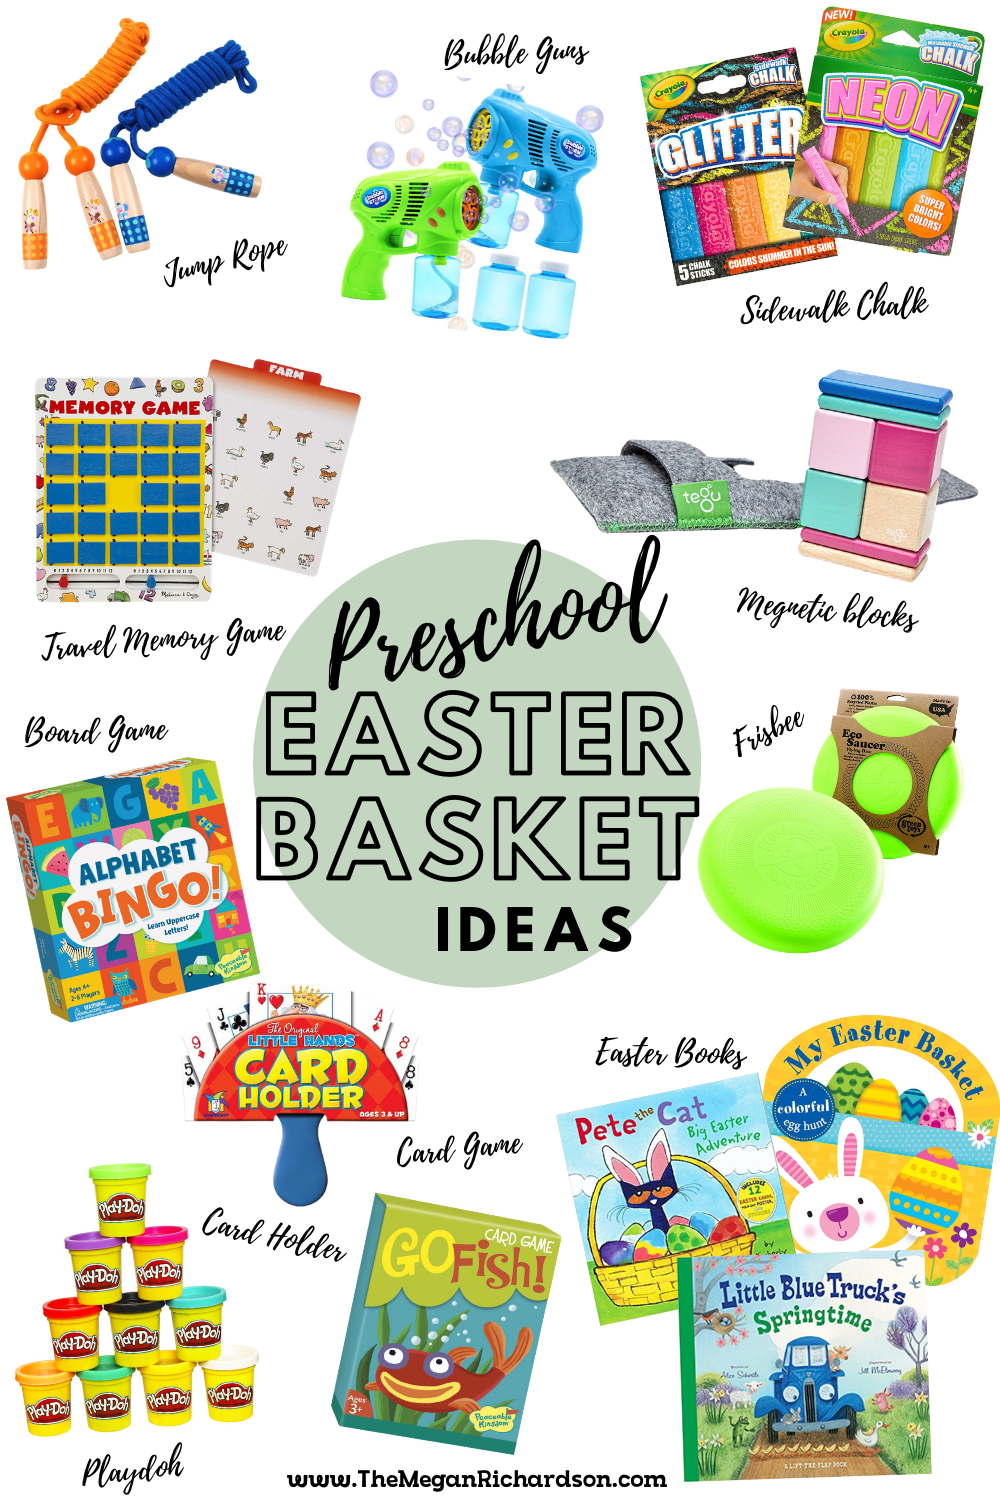 Easter Basket ideas